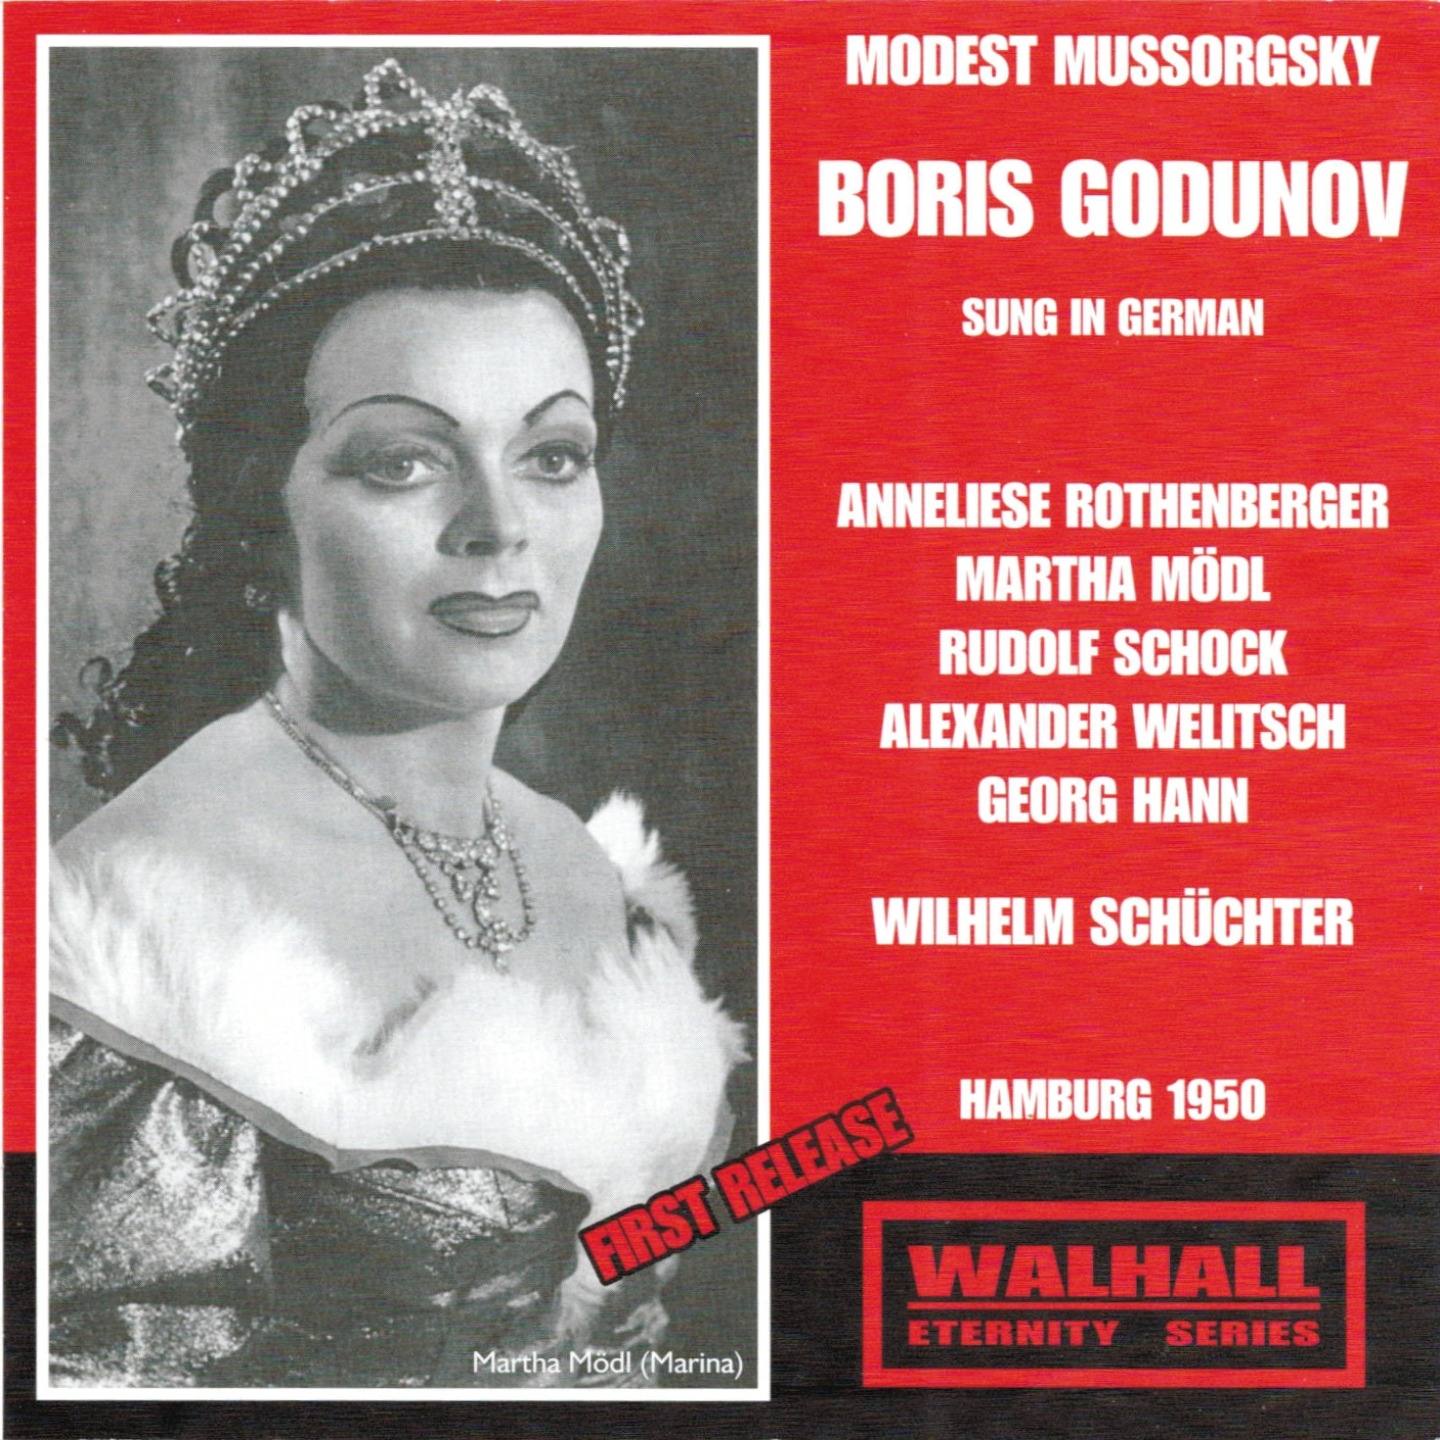 Boris Godunov : Act II  Mü ck' und Wanze lebten beid'